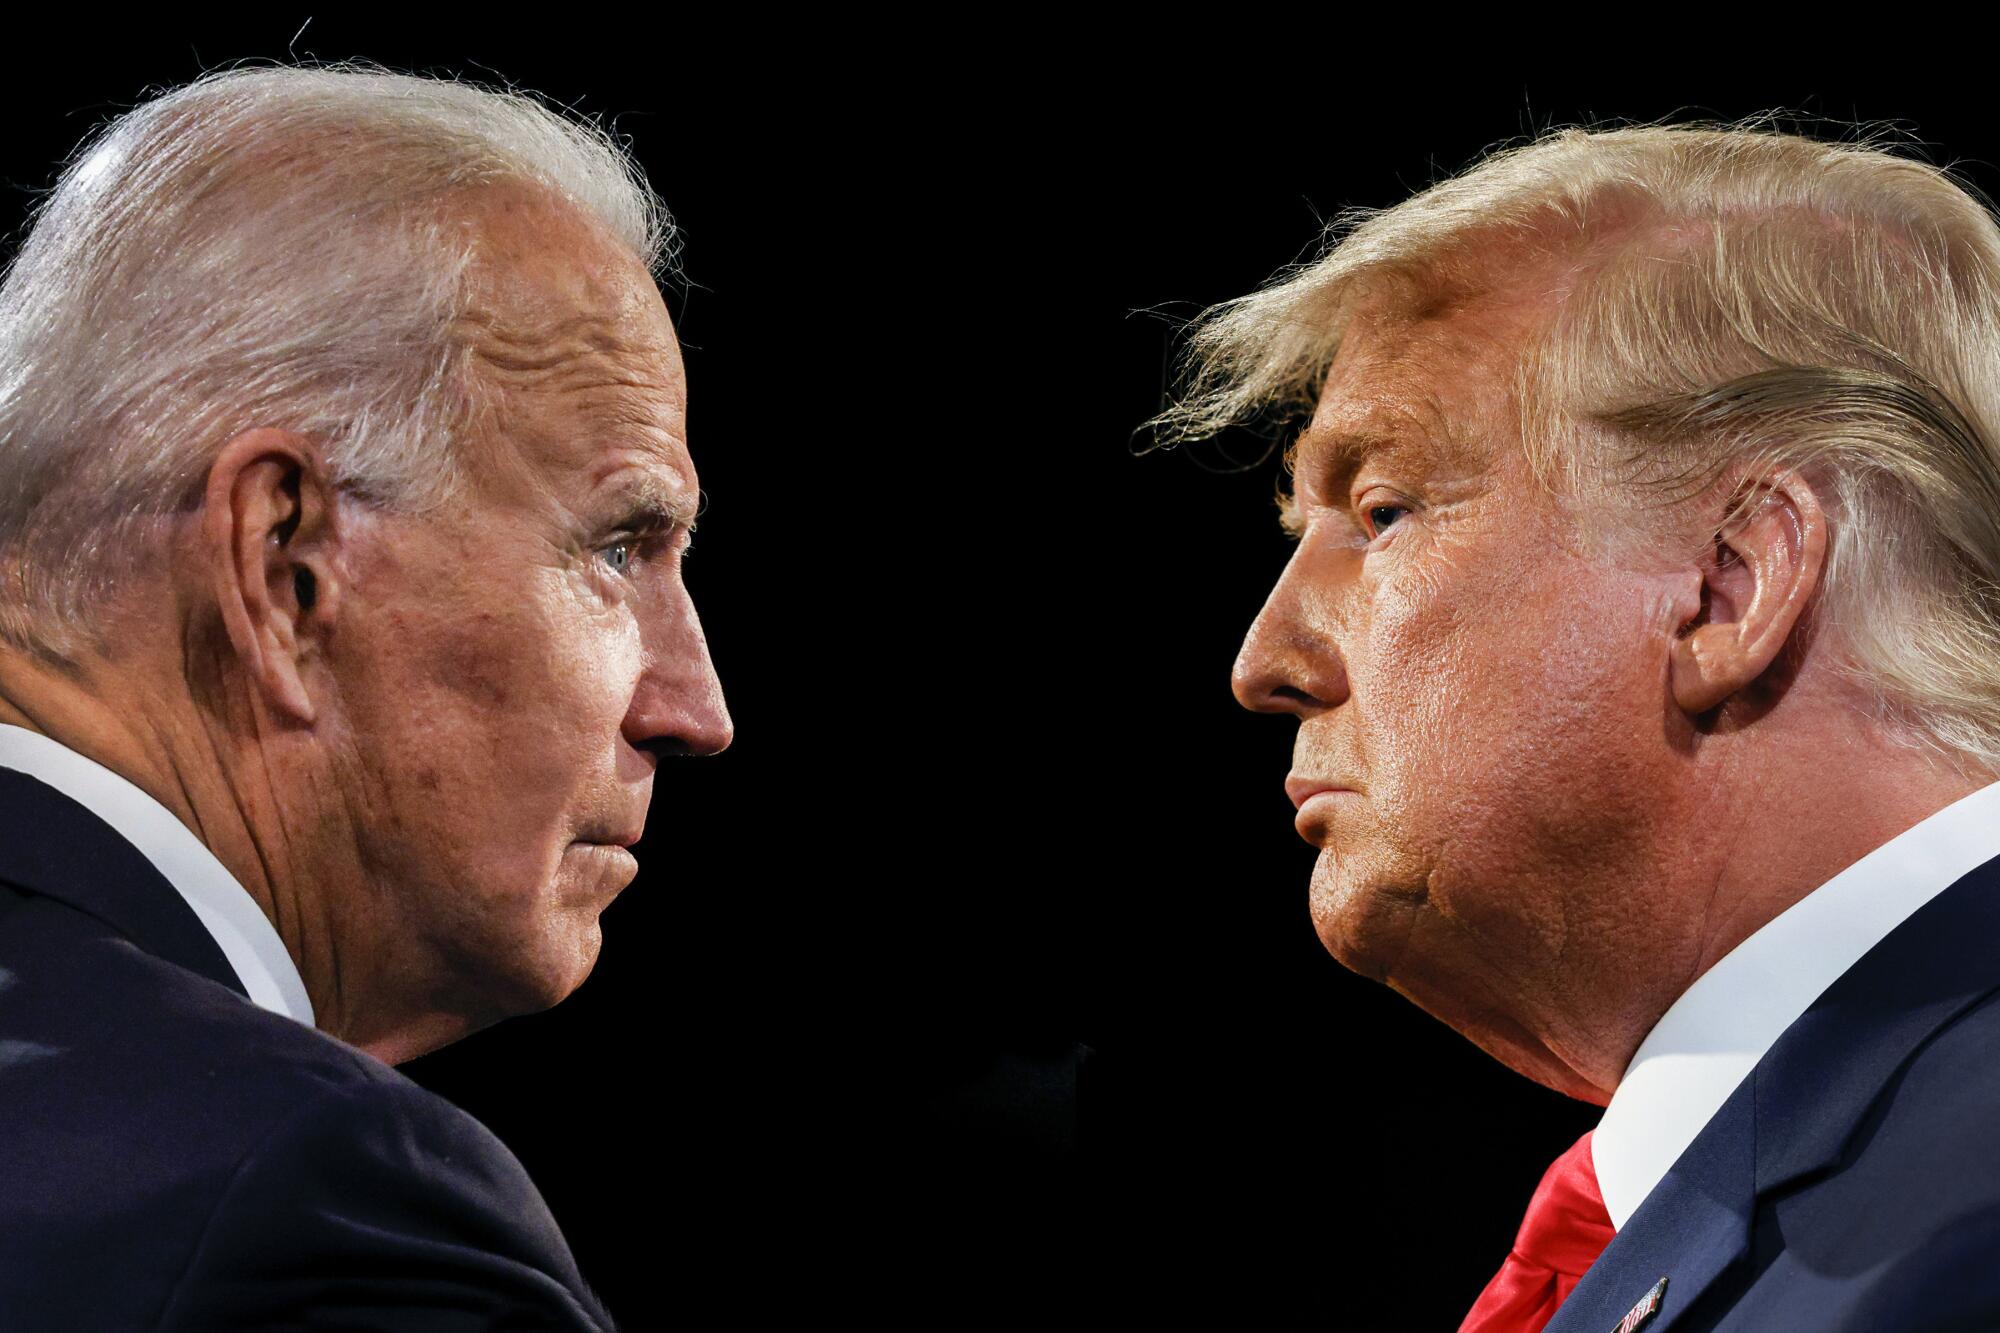 Despite age debate, Biden maintains lead over Trump in survey (Credits: LA Times)